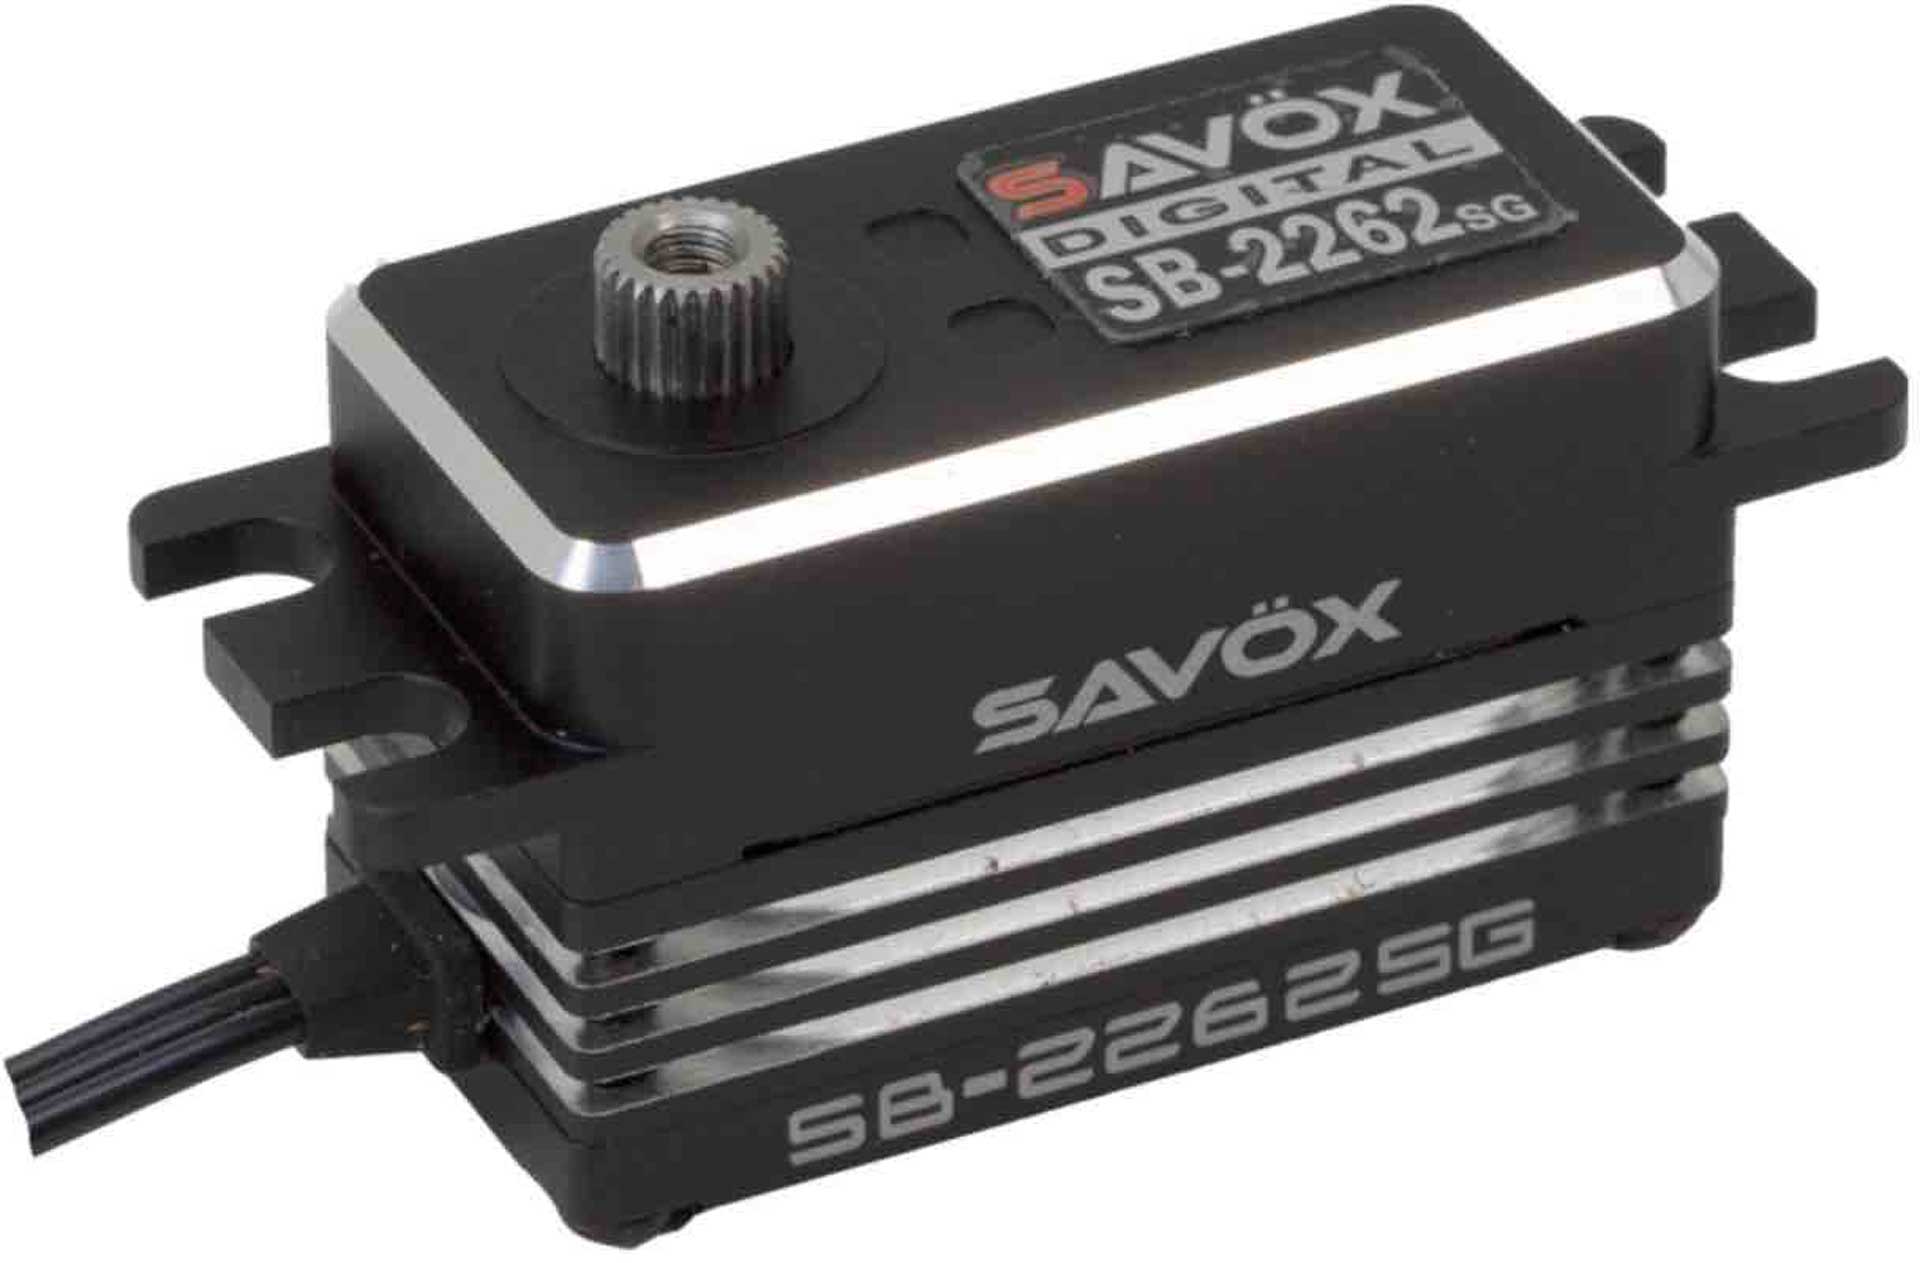 SAVÖX SB-2262SG (8,4V/30KG/0,065s) DIGITAL HV LOW PROFILE SERVO BLACK LINE